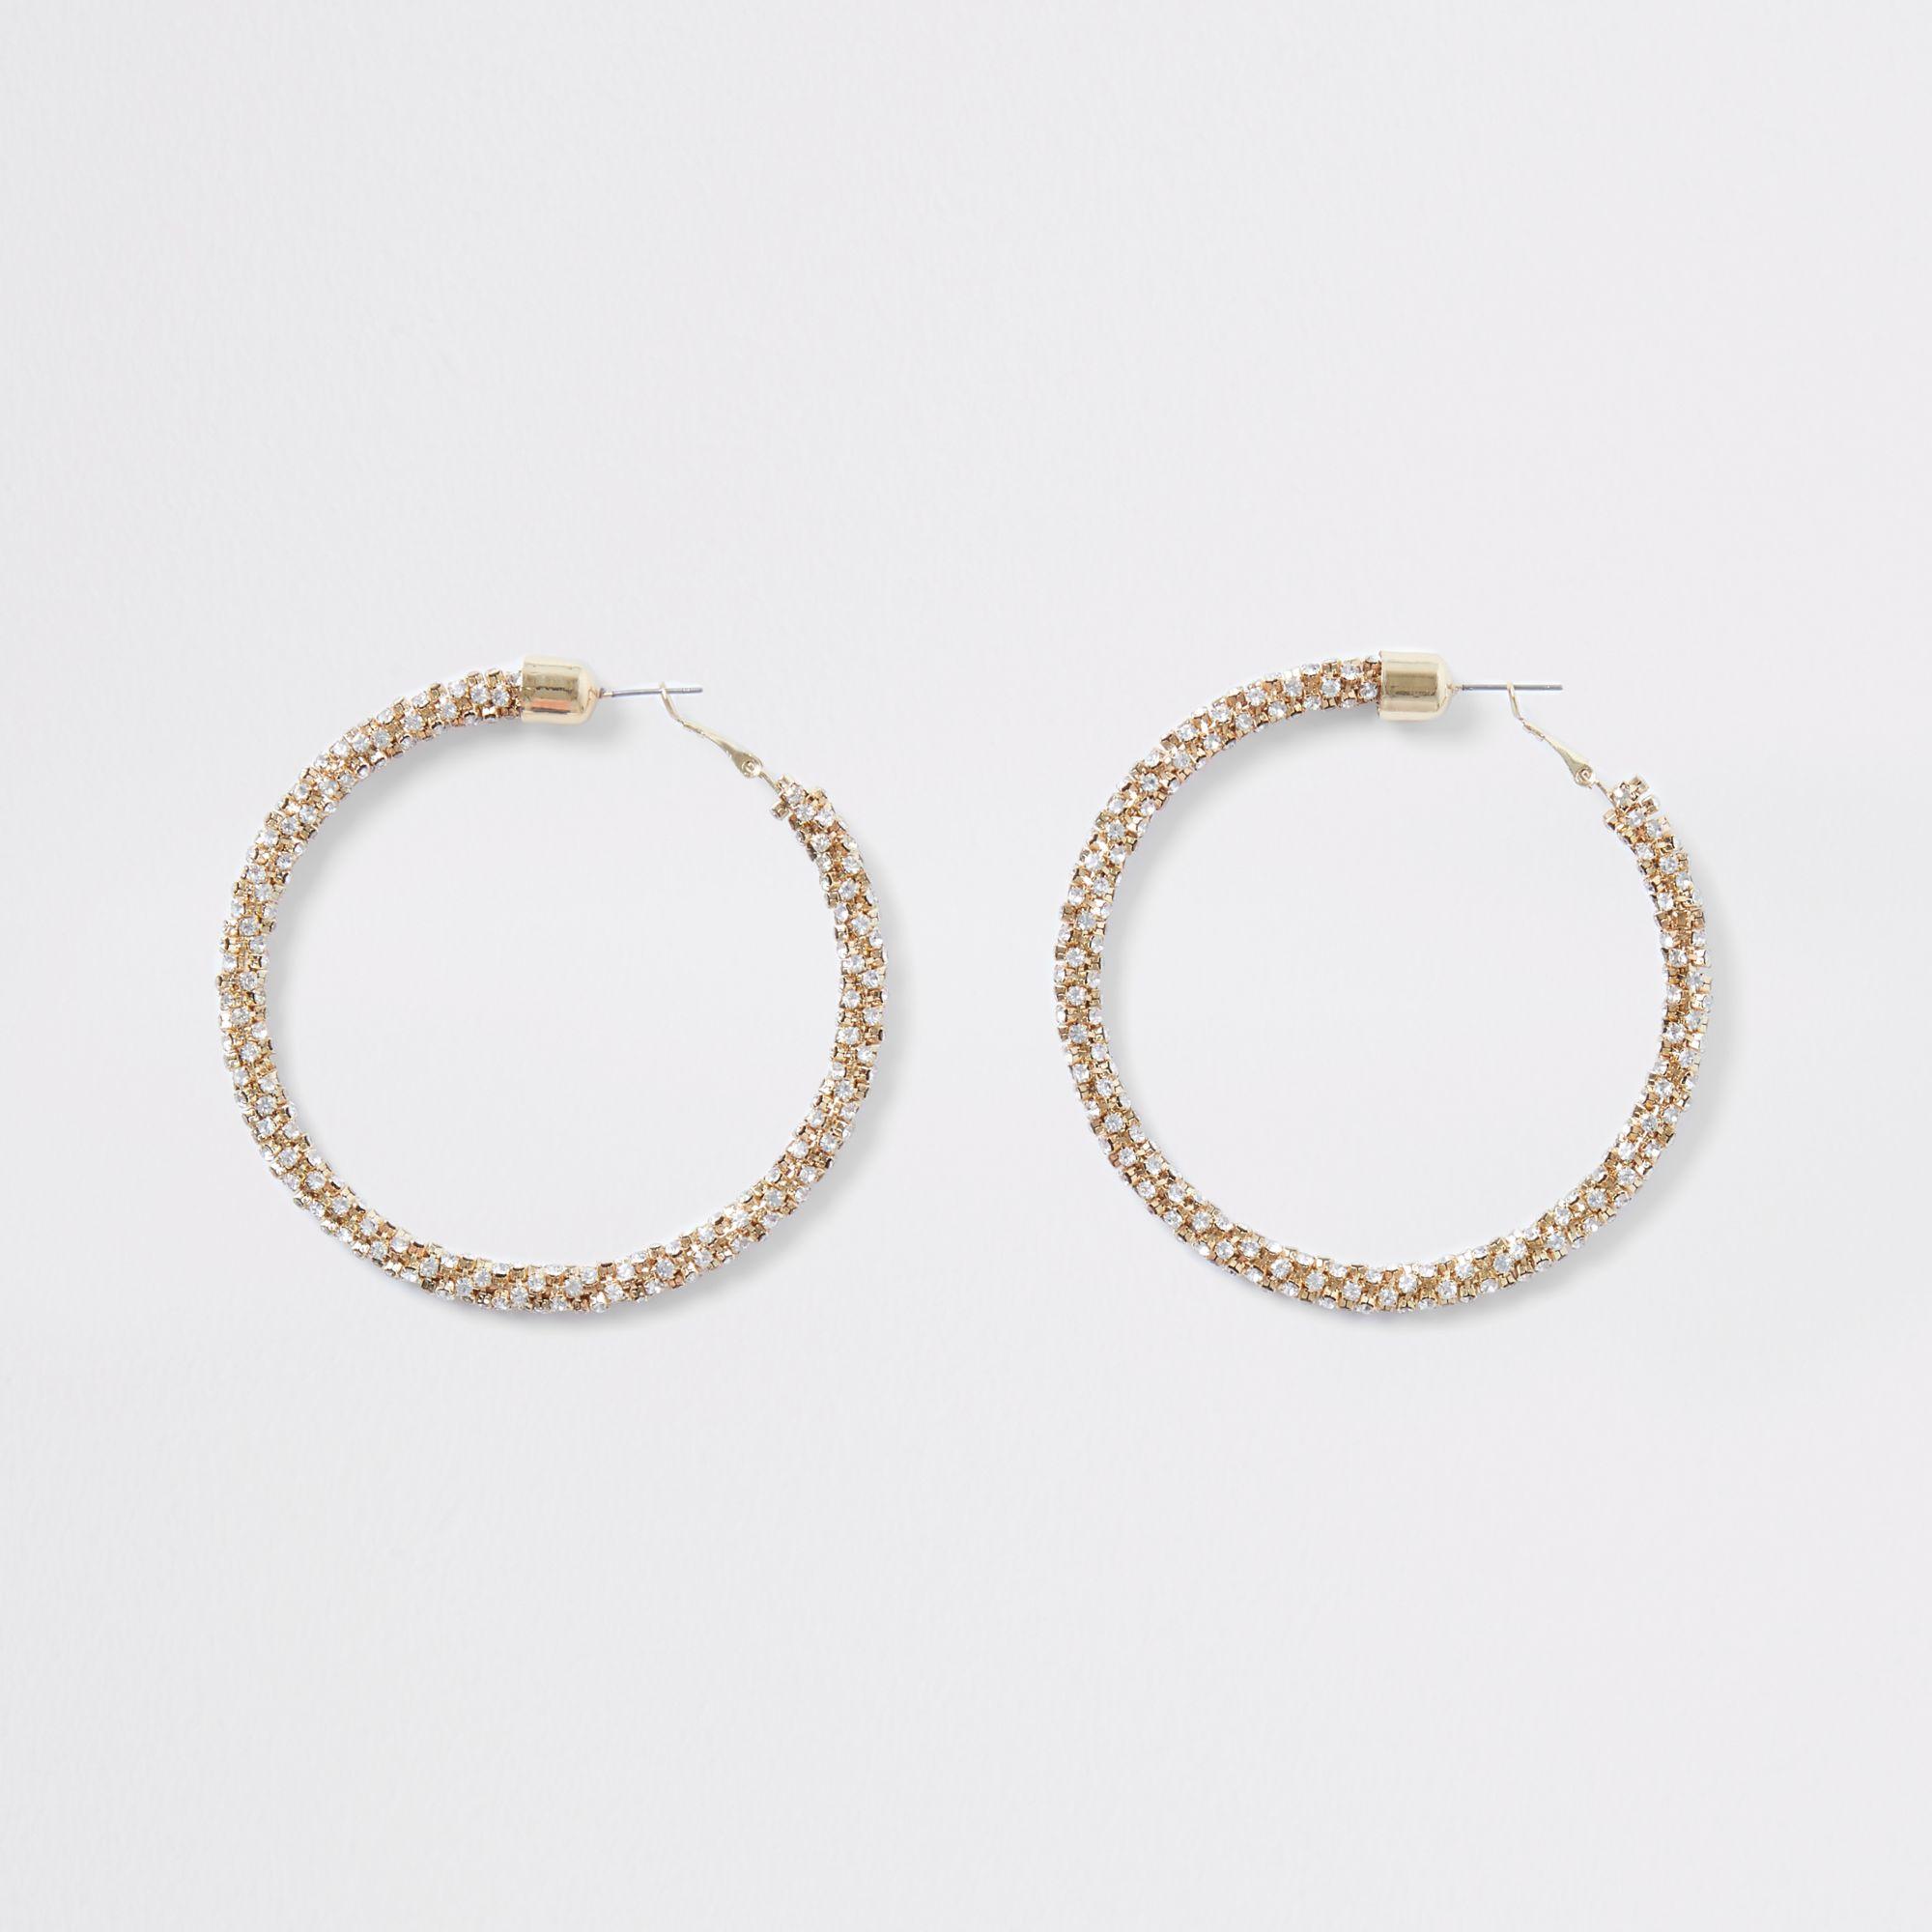 River Island Colour Diamante Hoop Earrings in Gold (Metallic) - Lyst